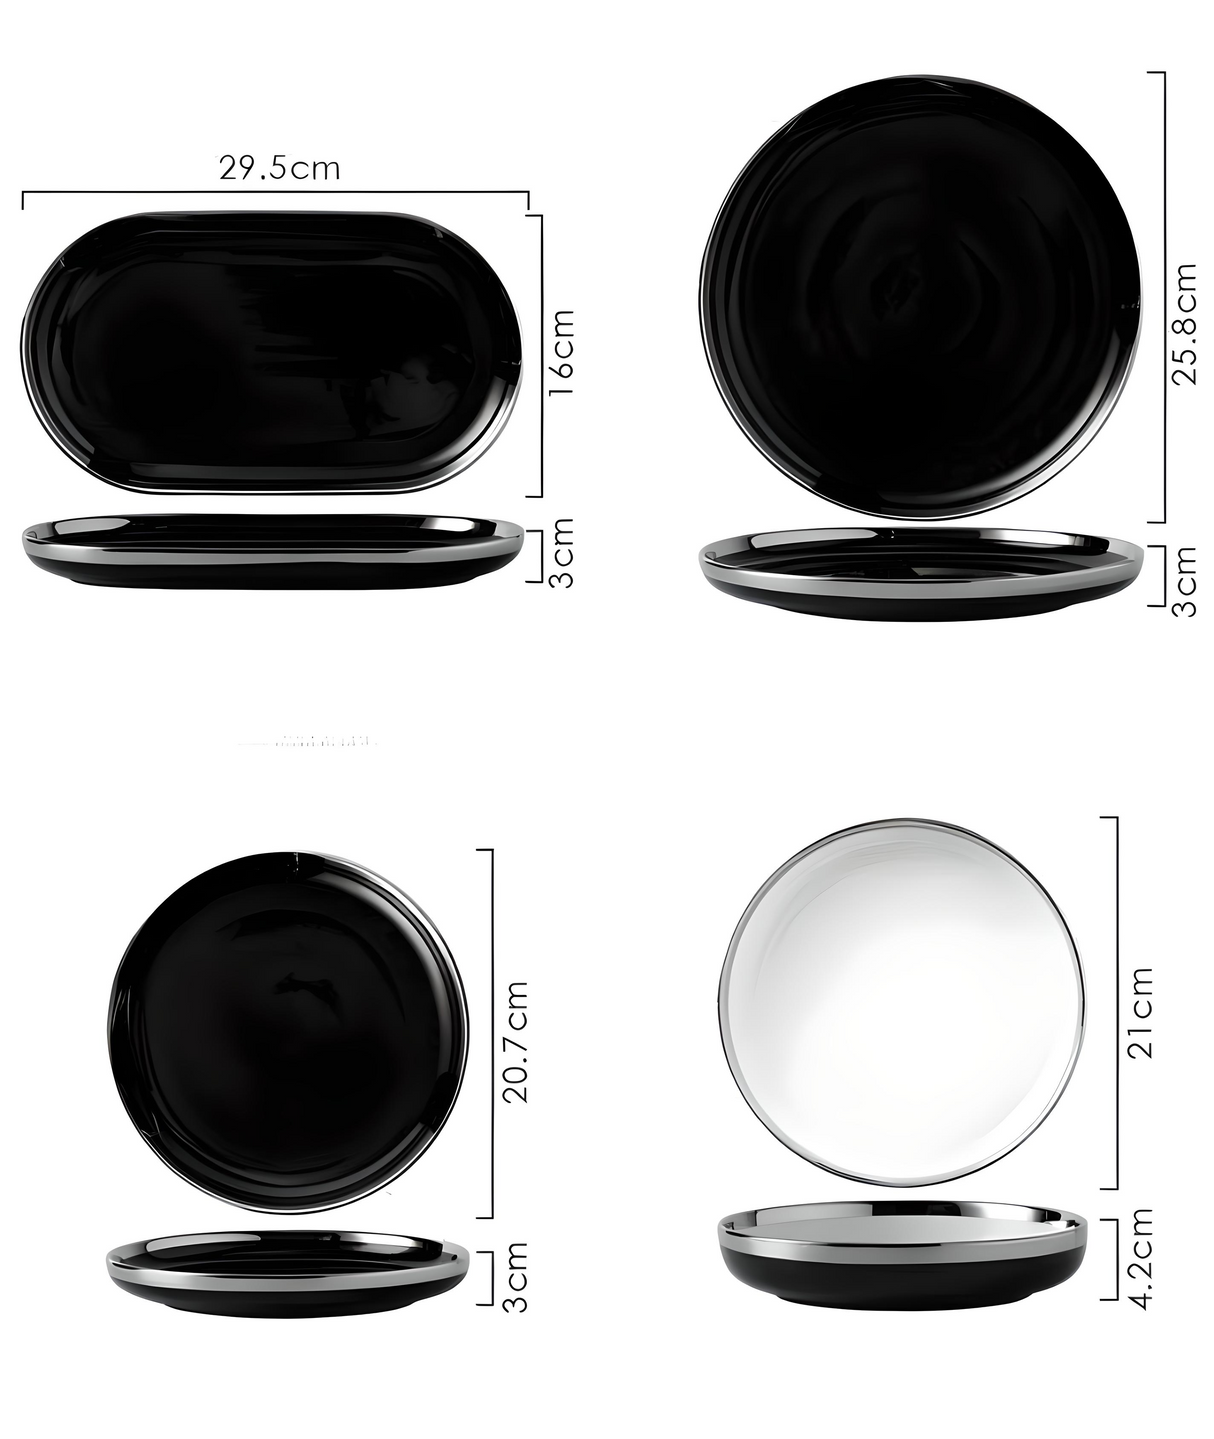 Black Silver Edge Tableware Set - Elegance and Sophistication